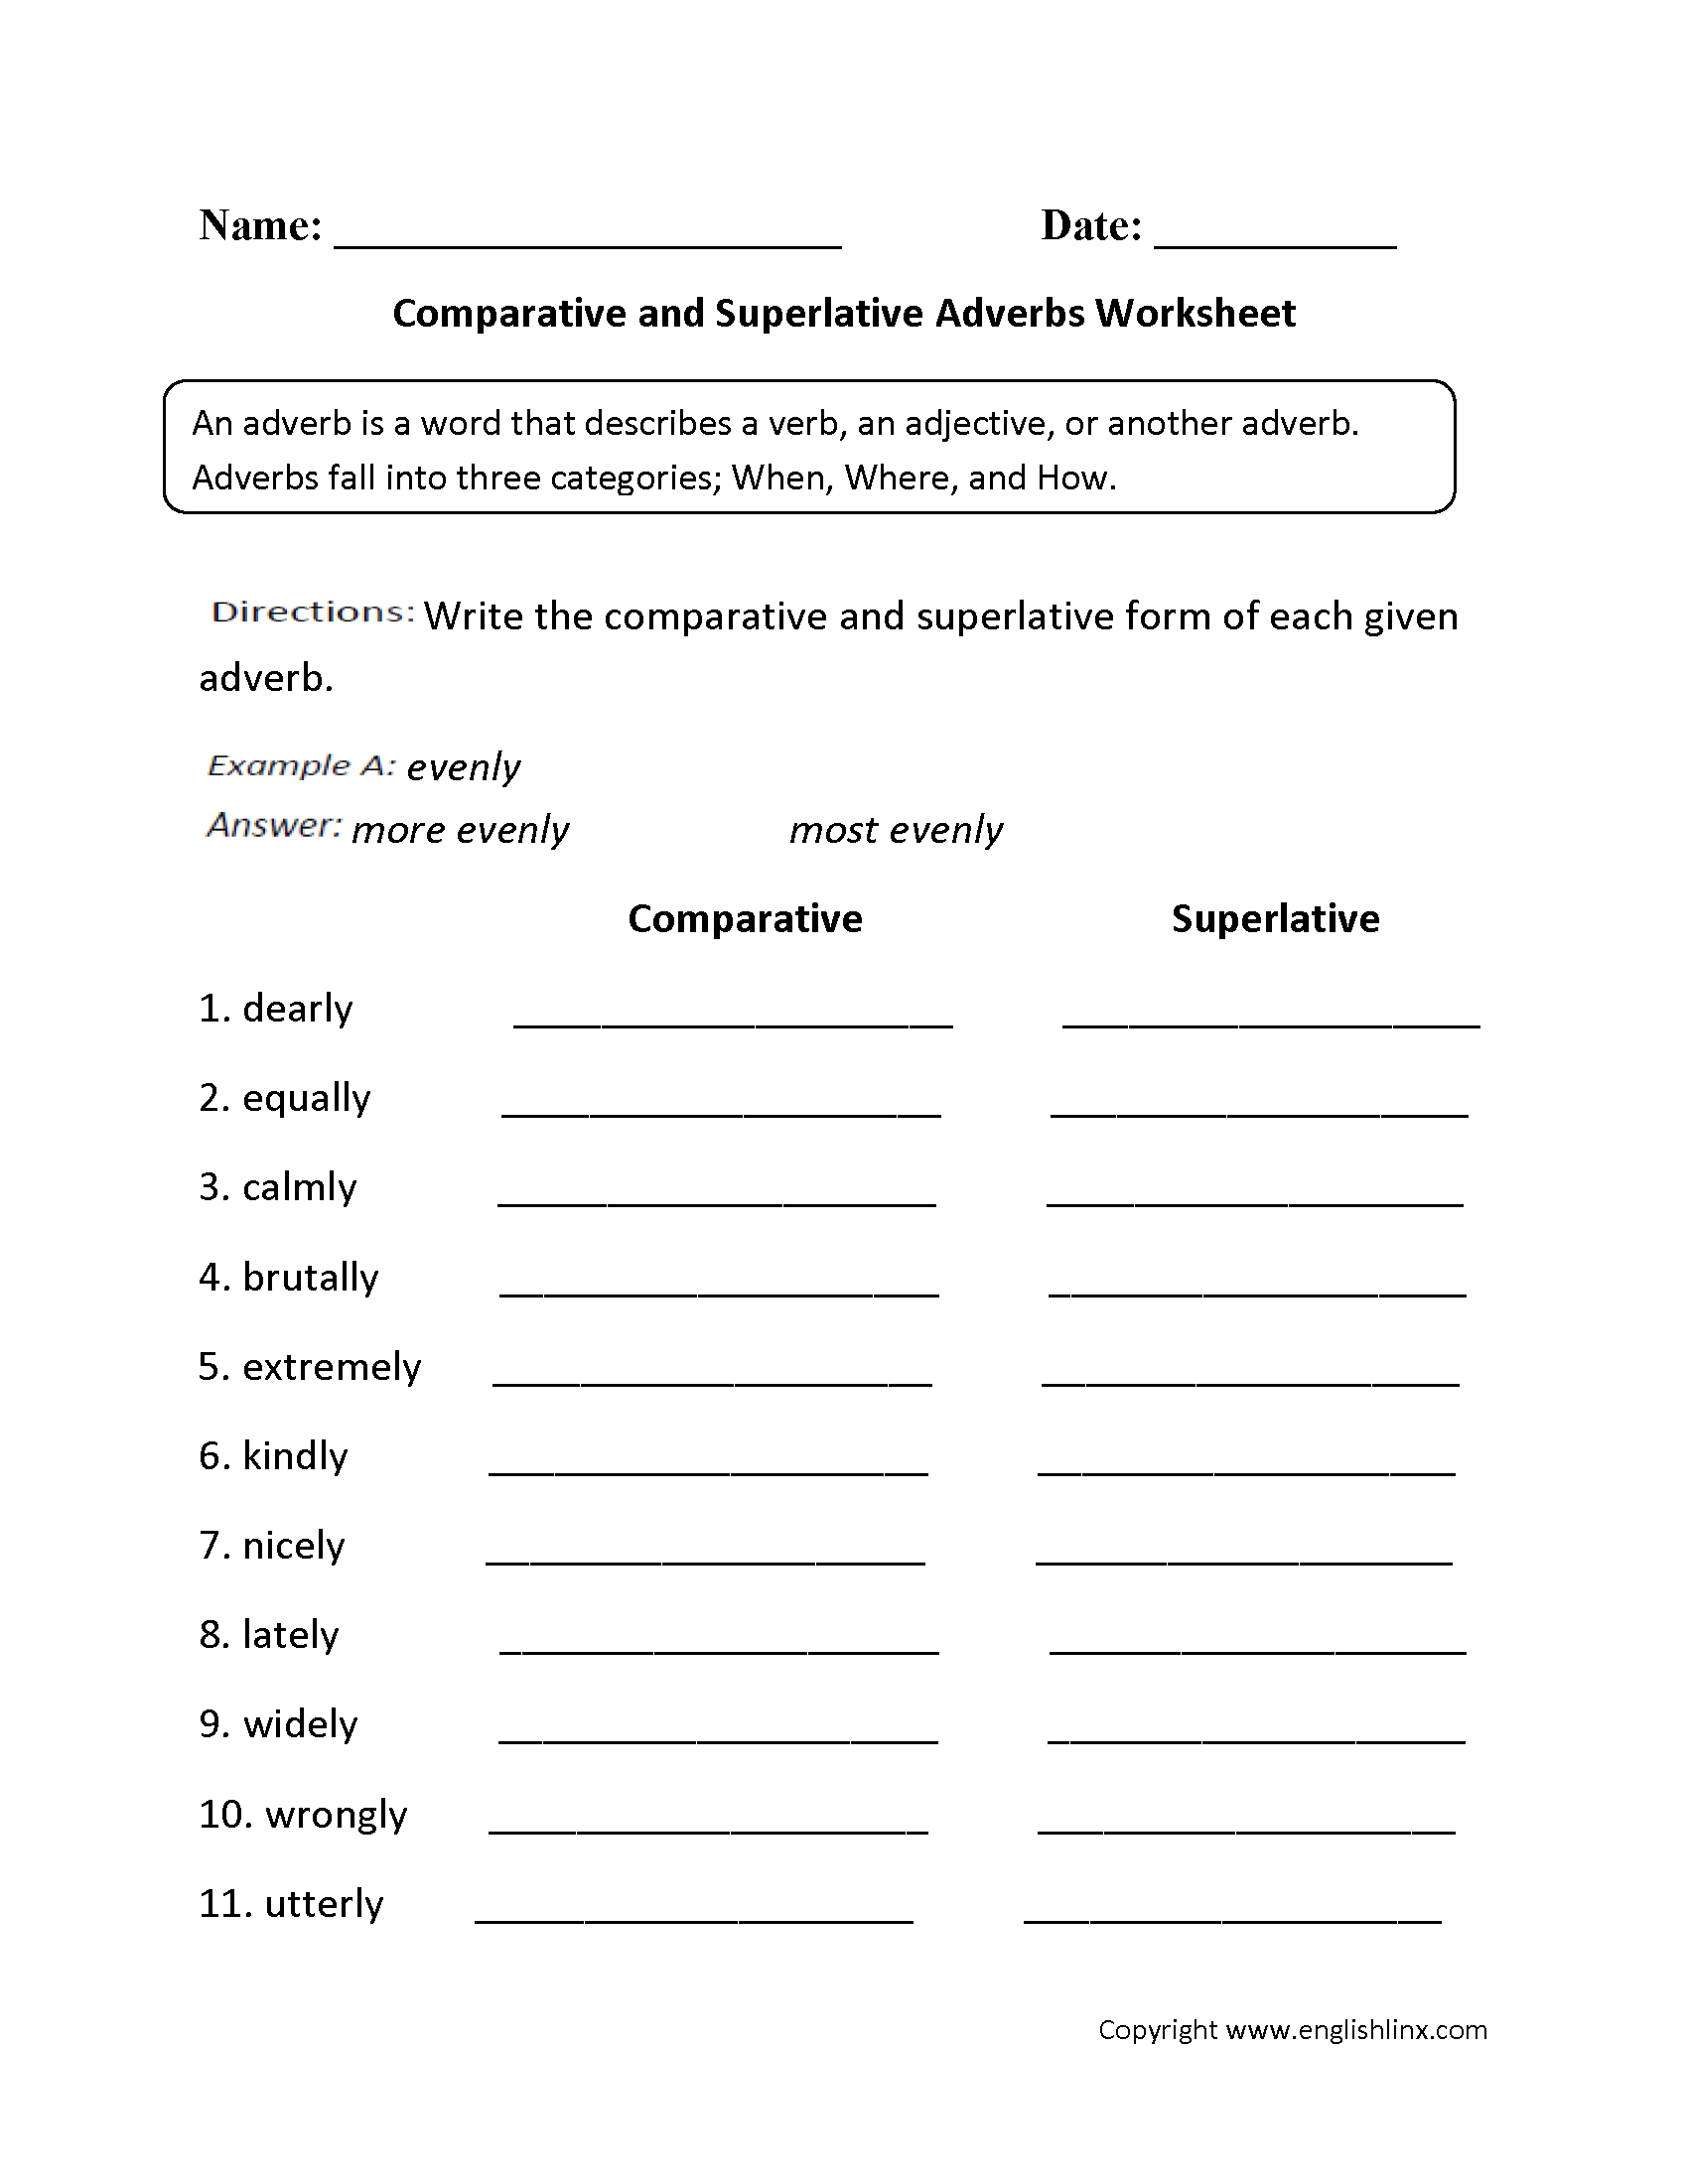 12-adverbs-of-frequency-esl-worksheets-worksheeto